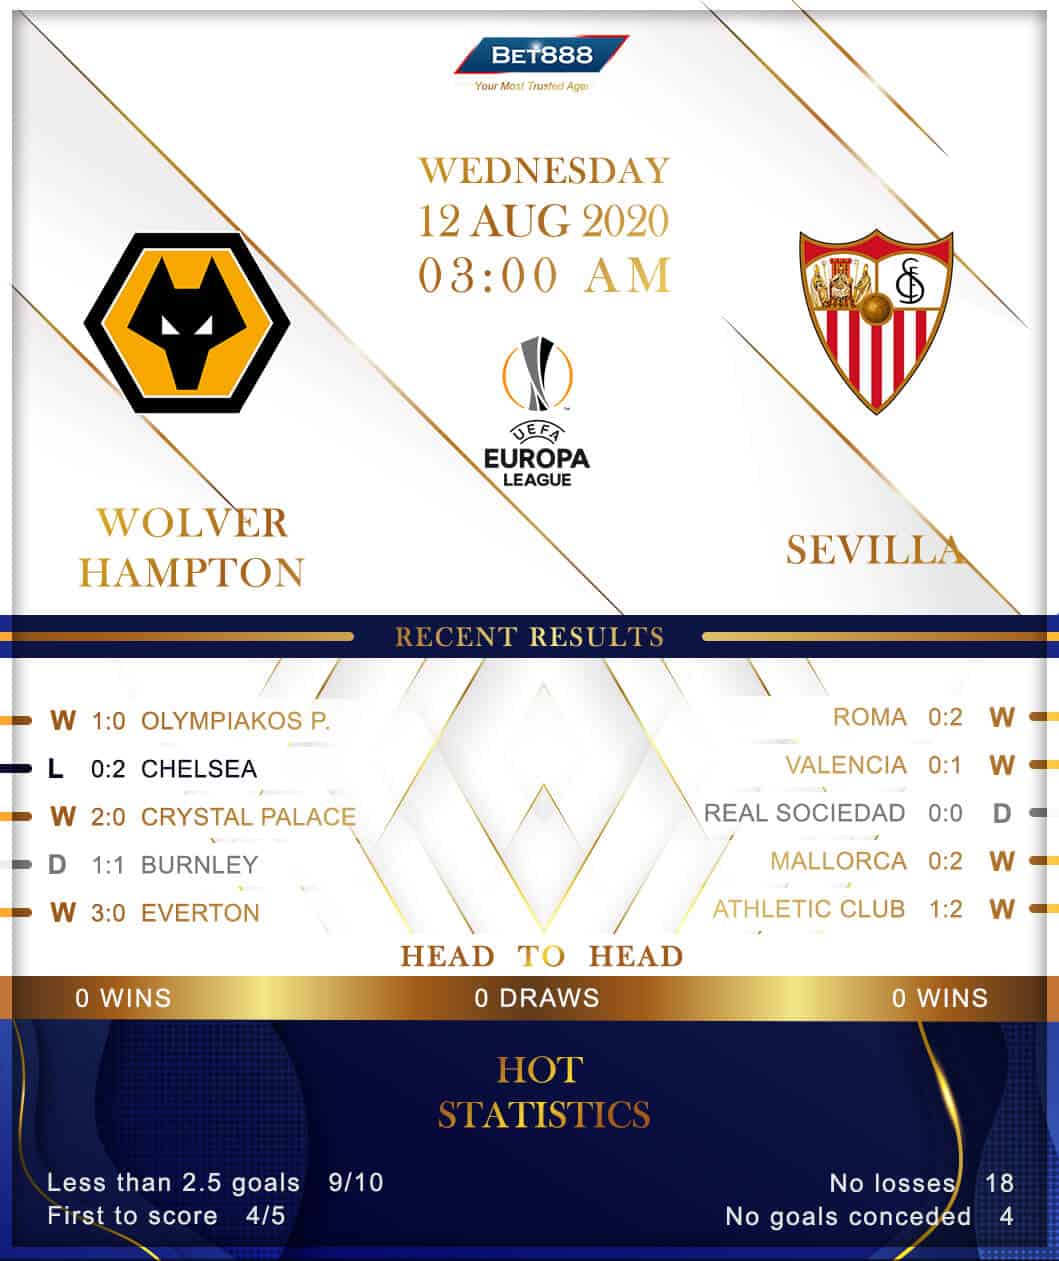 Wolvehampton Wanderers vs Sevilla 12/08/20